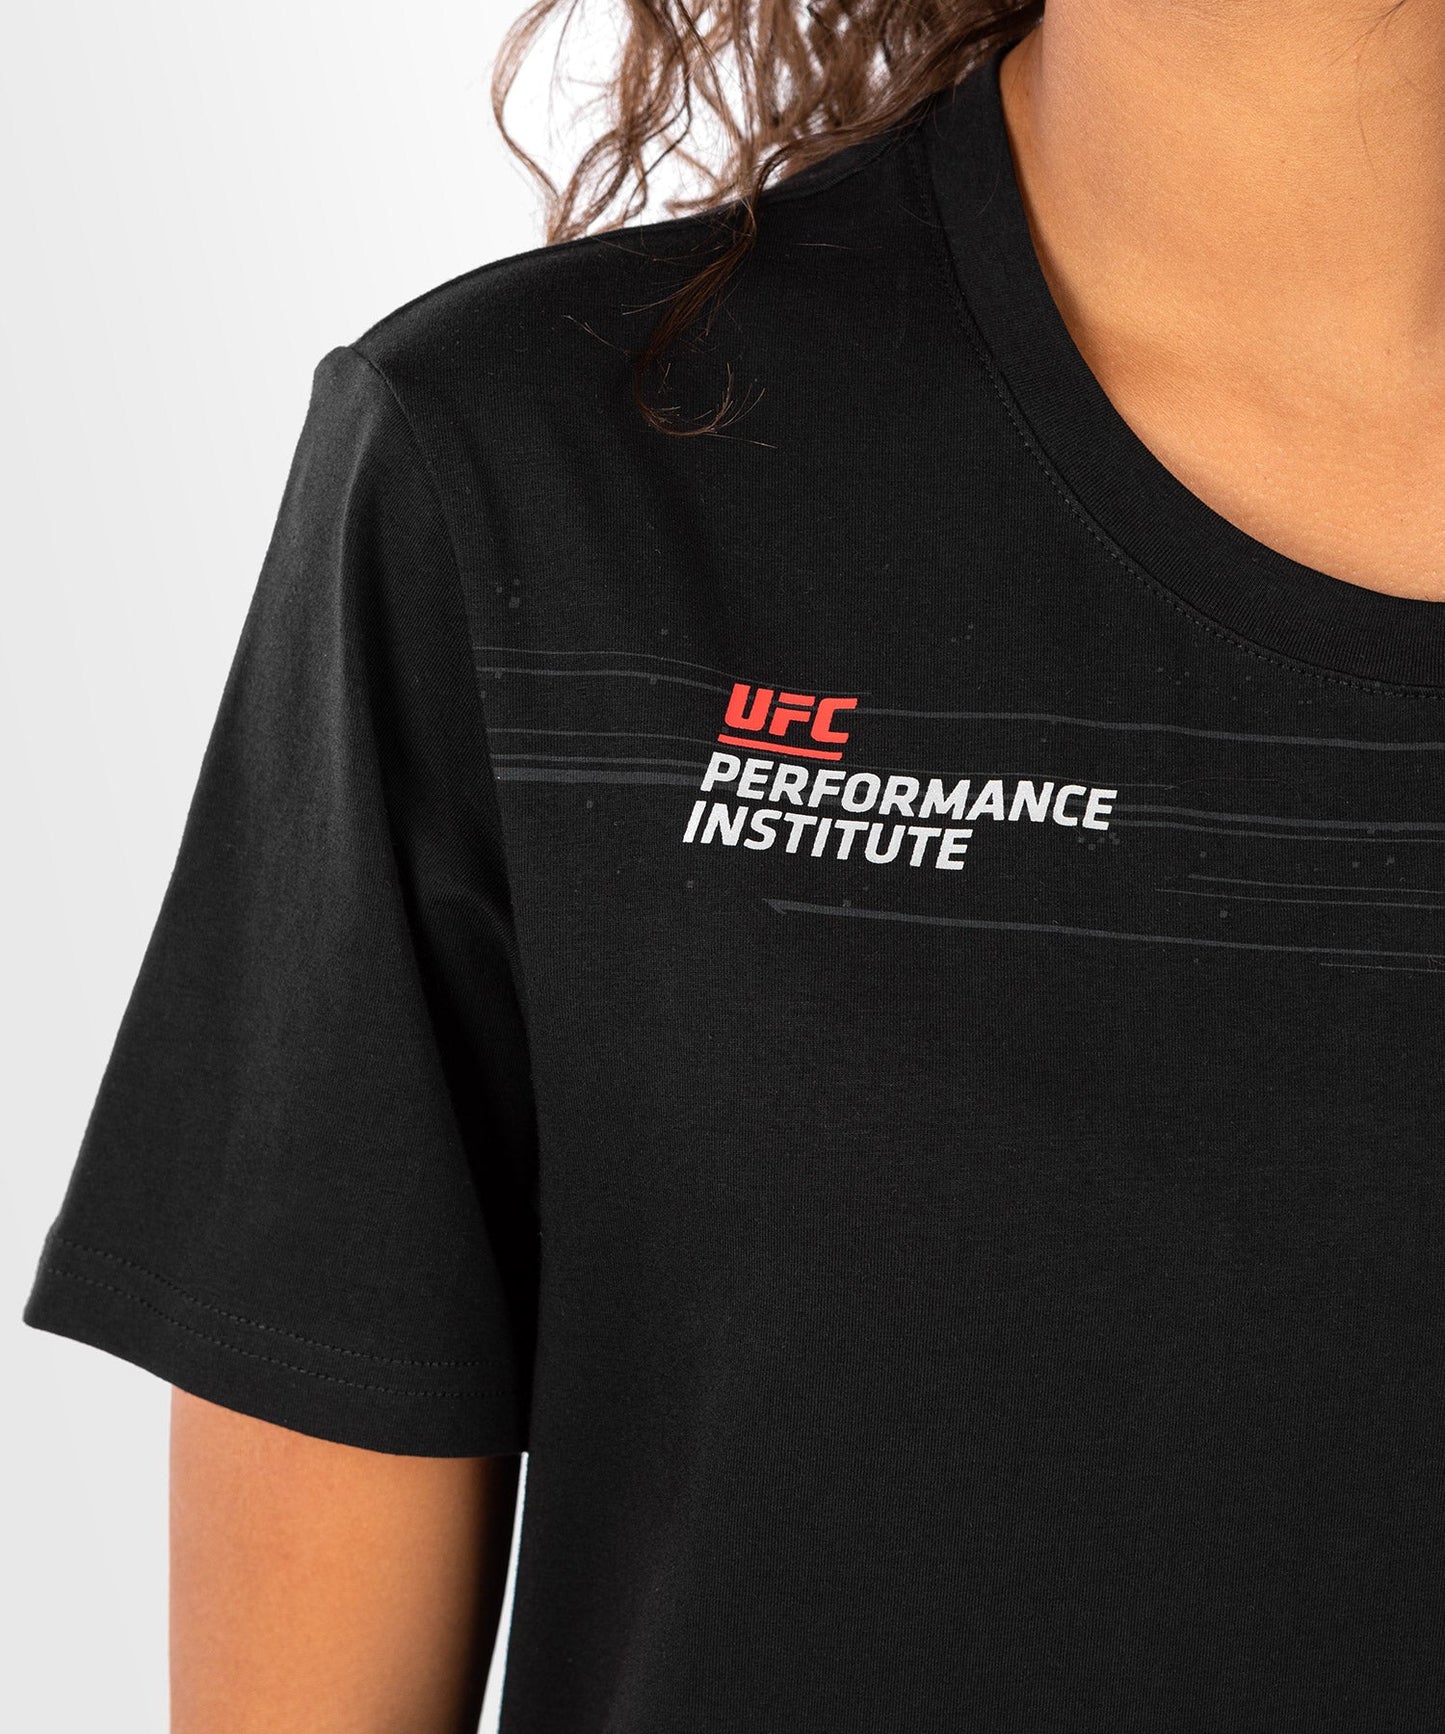 UFC Venum Performance Institute 2.0  Damen T-Shirt - Schwarz/Rot